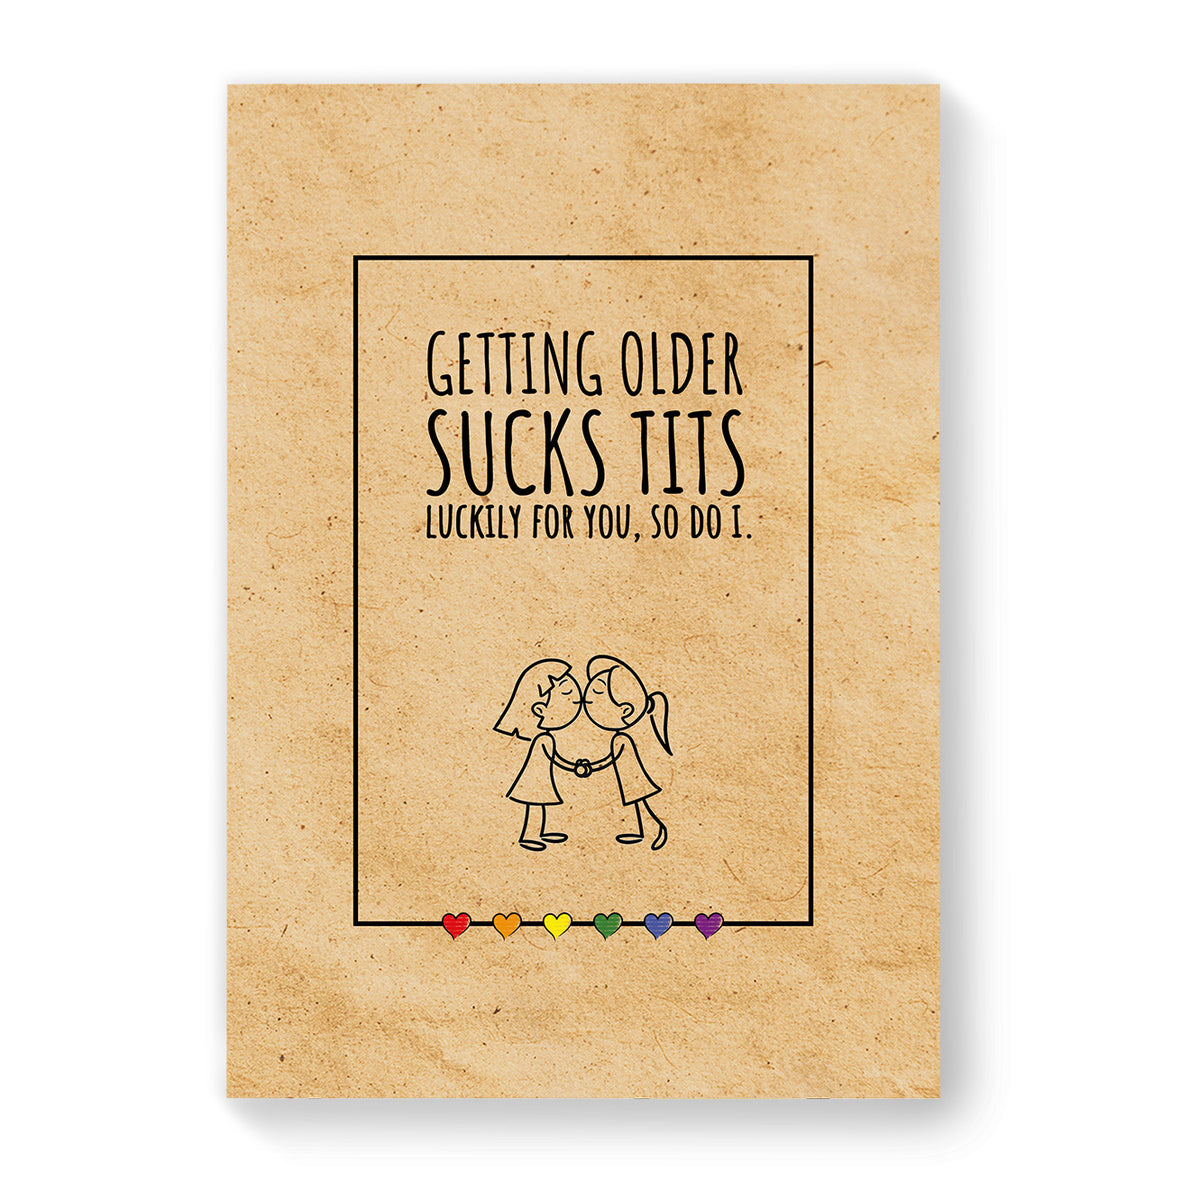 Getting older sucks tits - Lesbian Gay Birthday Card - Vintage Brown | Gift